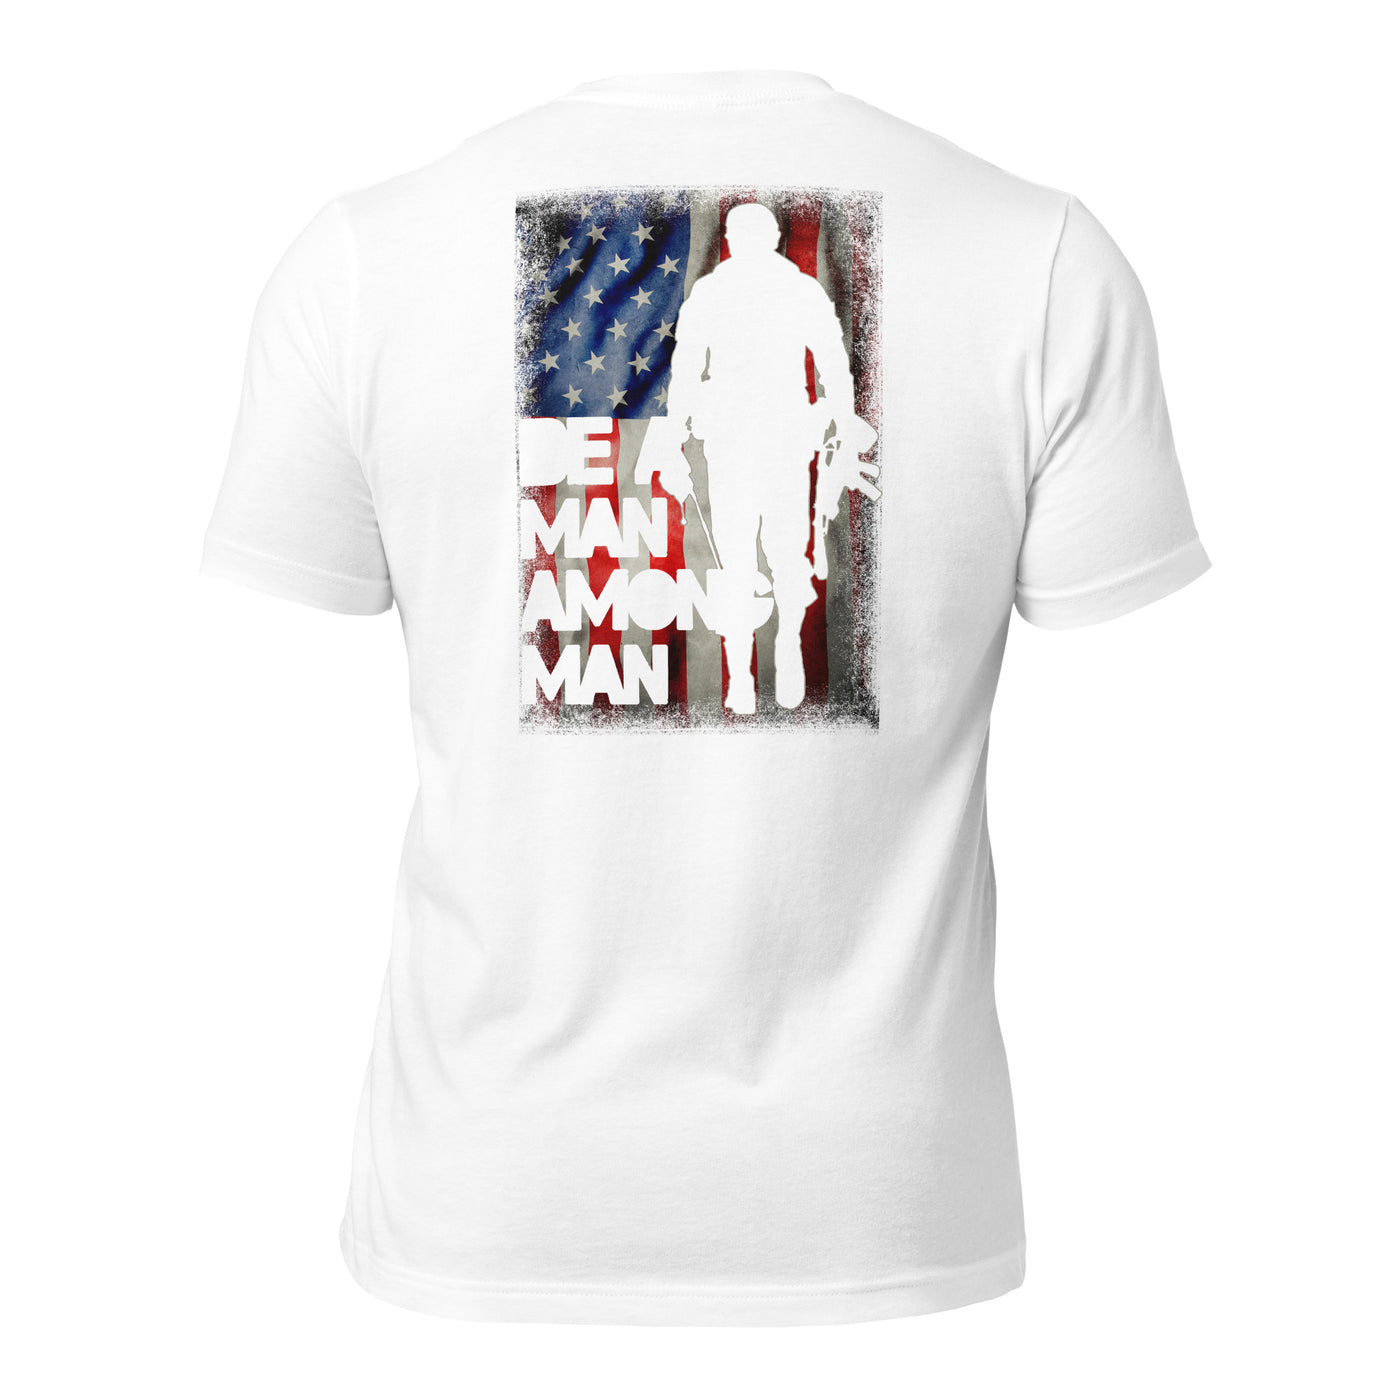 Be a man among men - Unisex t-shirt ( Back Print )